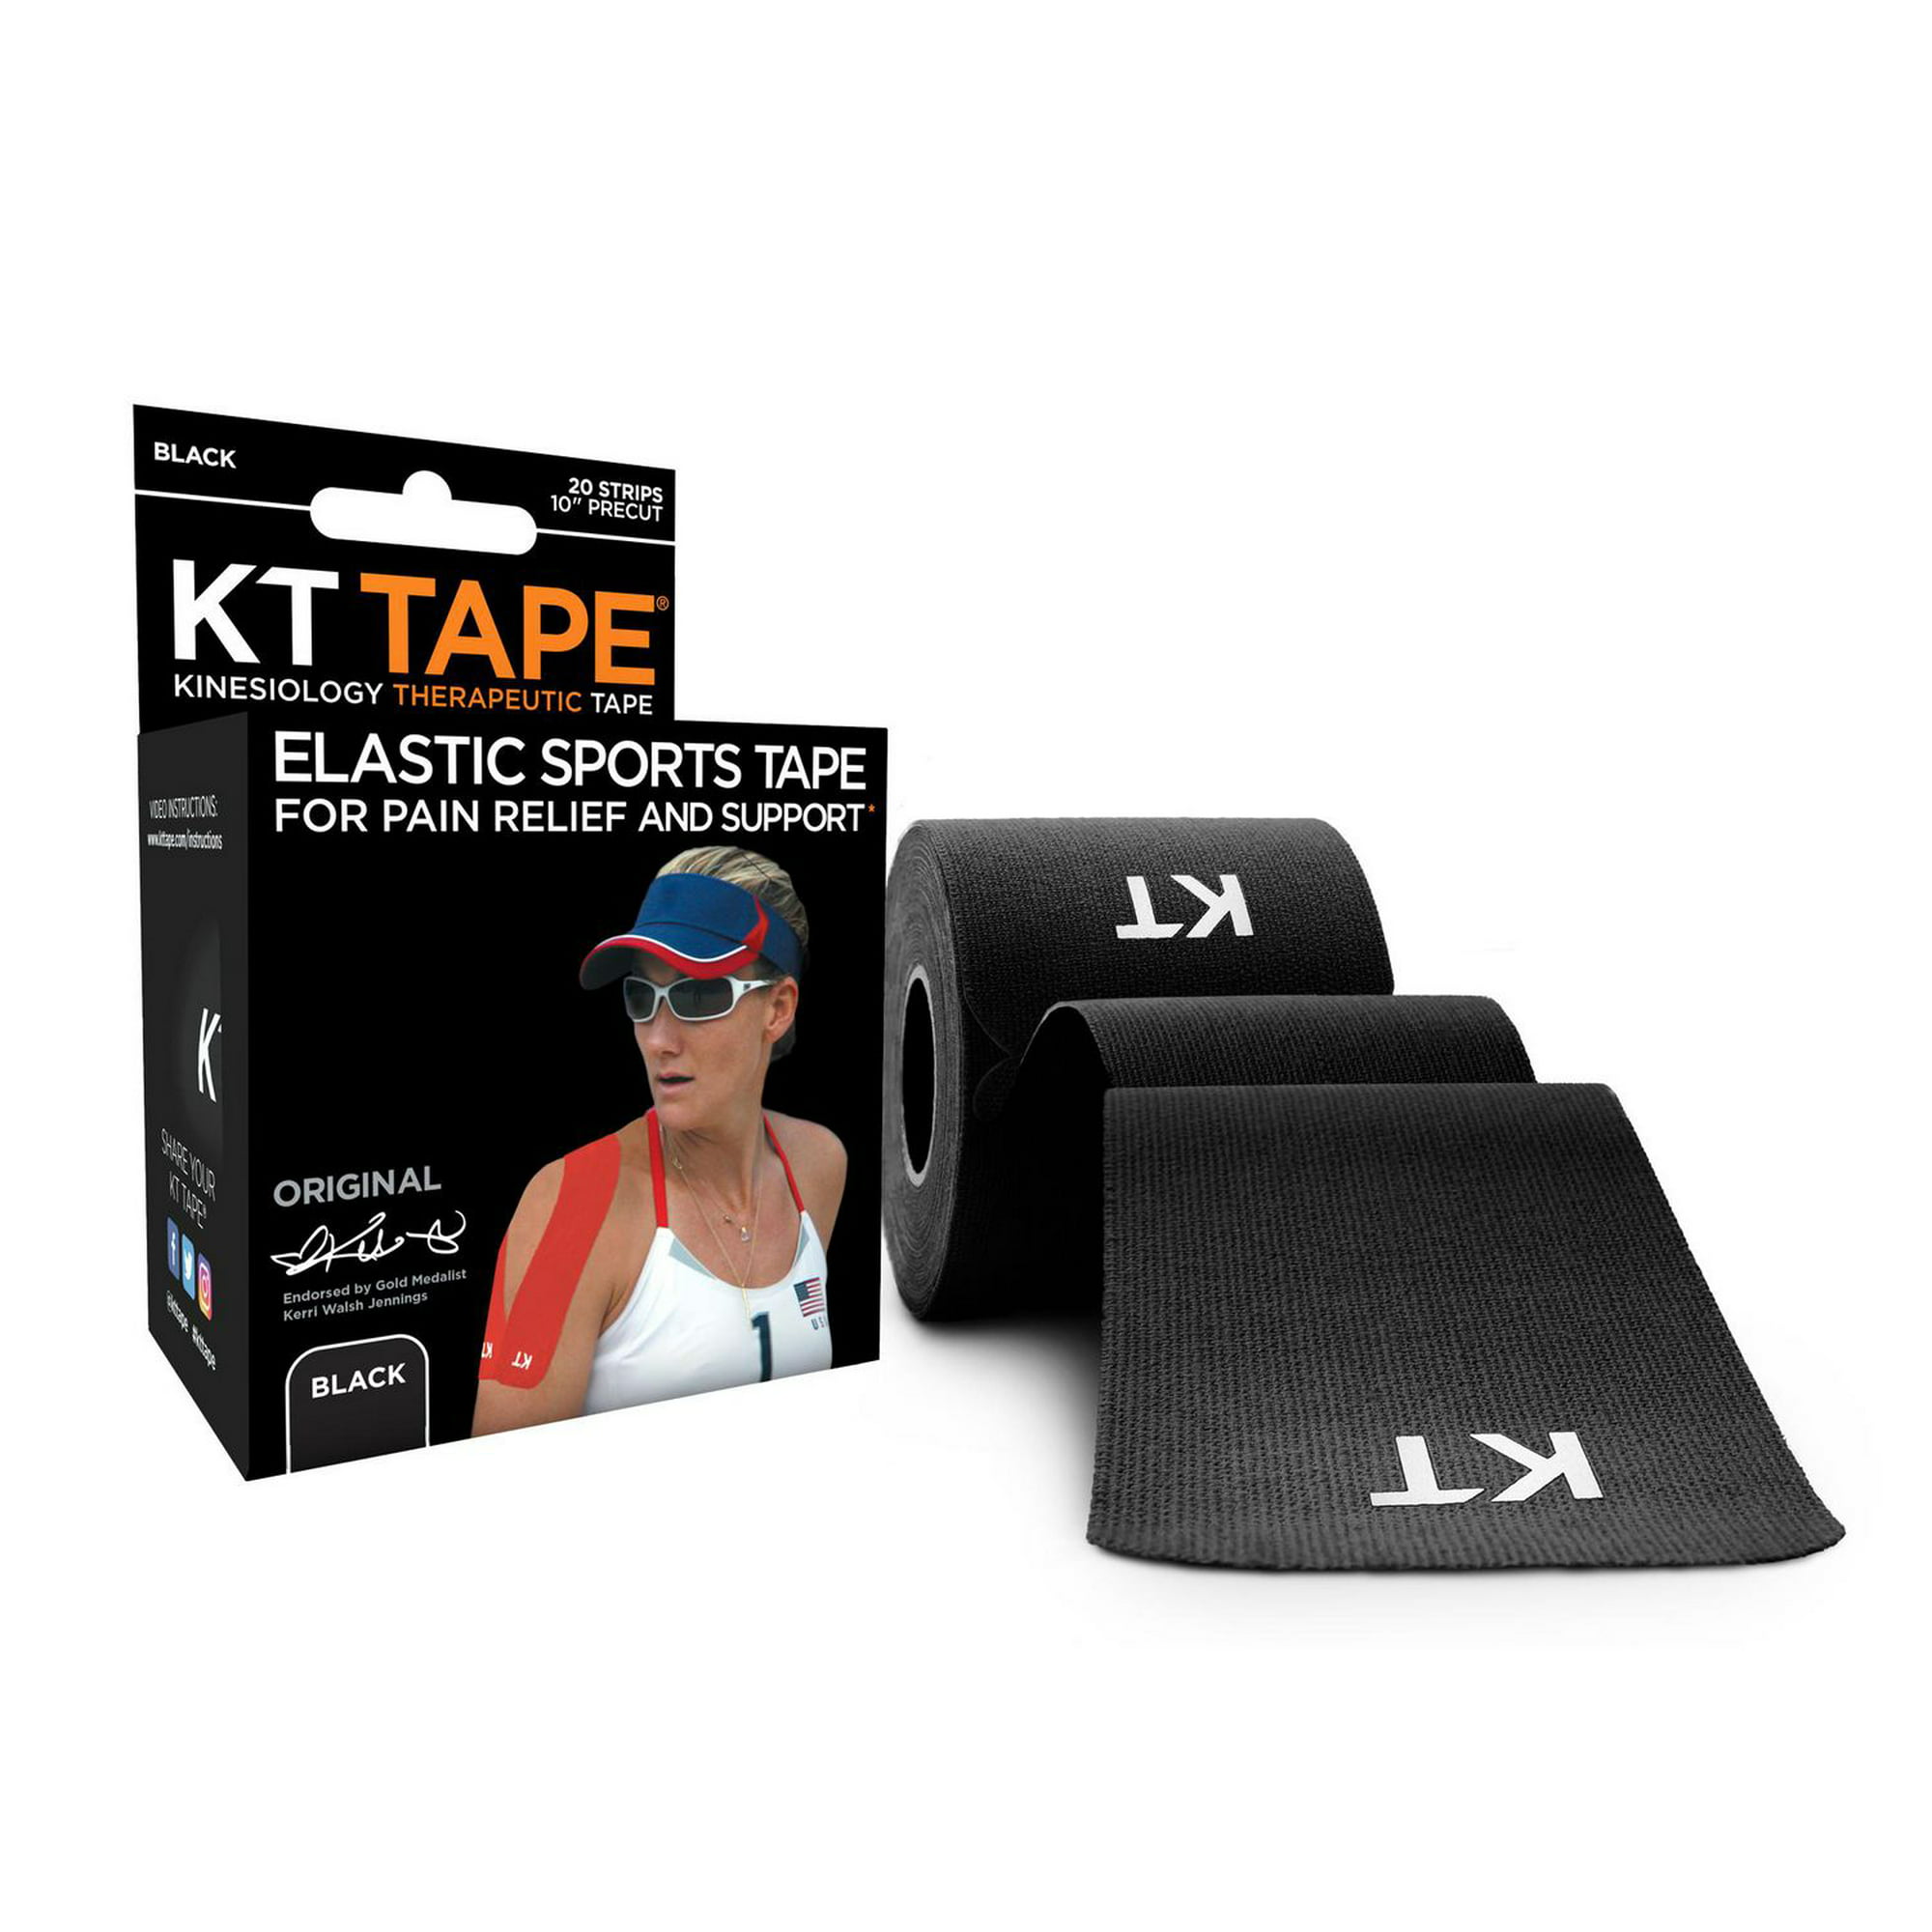 Pro-Tec Athletics Kinesiology Tape One Size Blue/Black